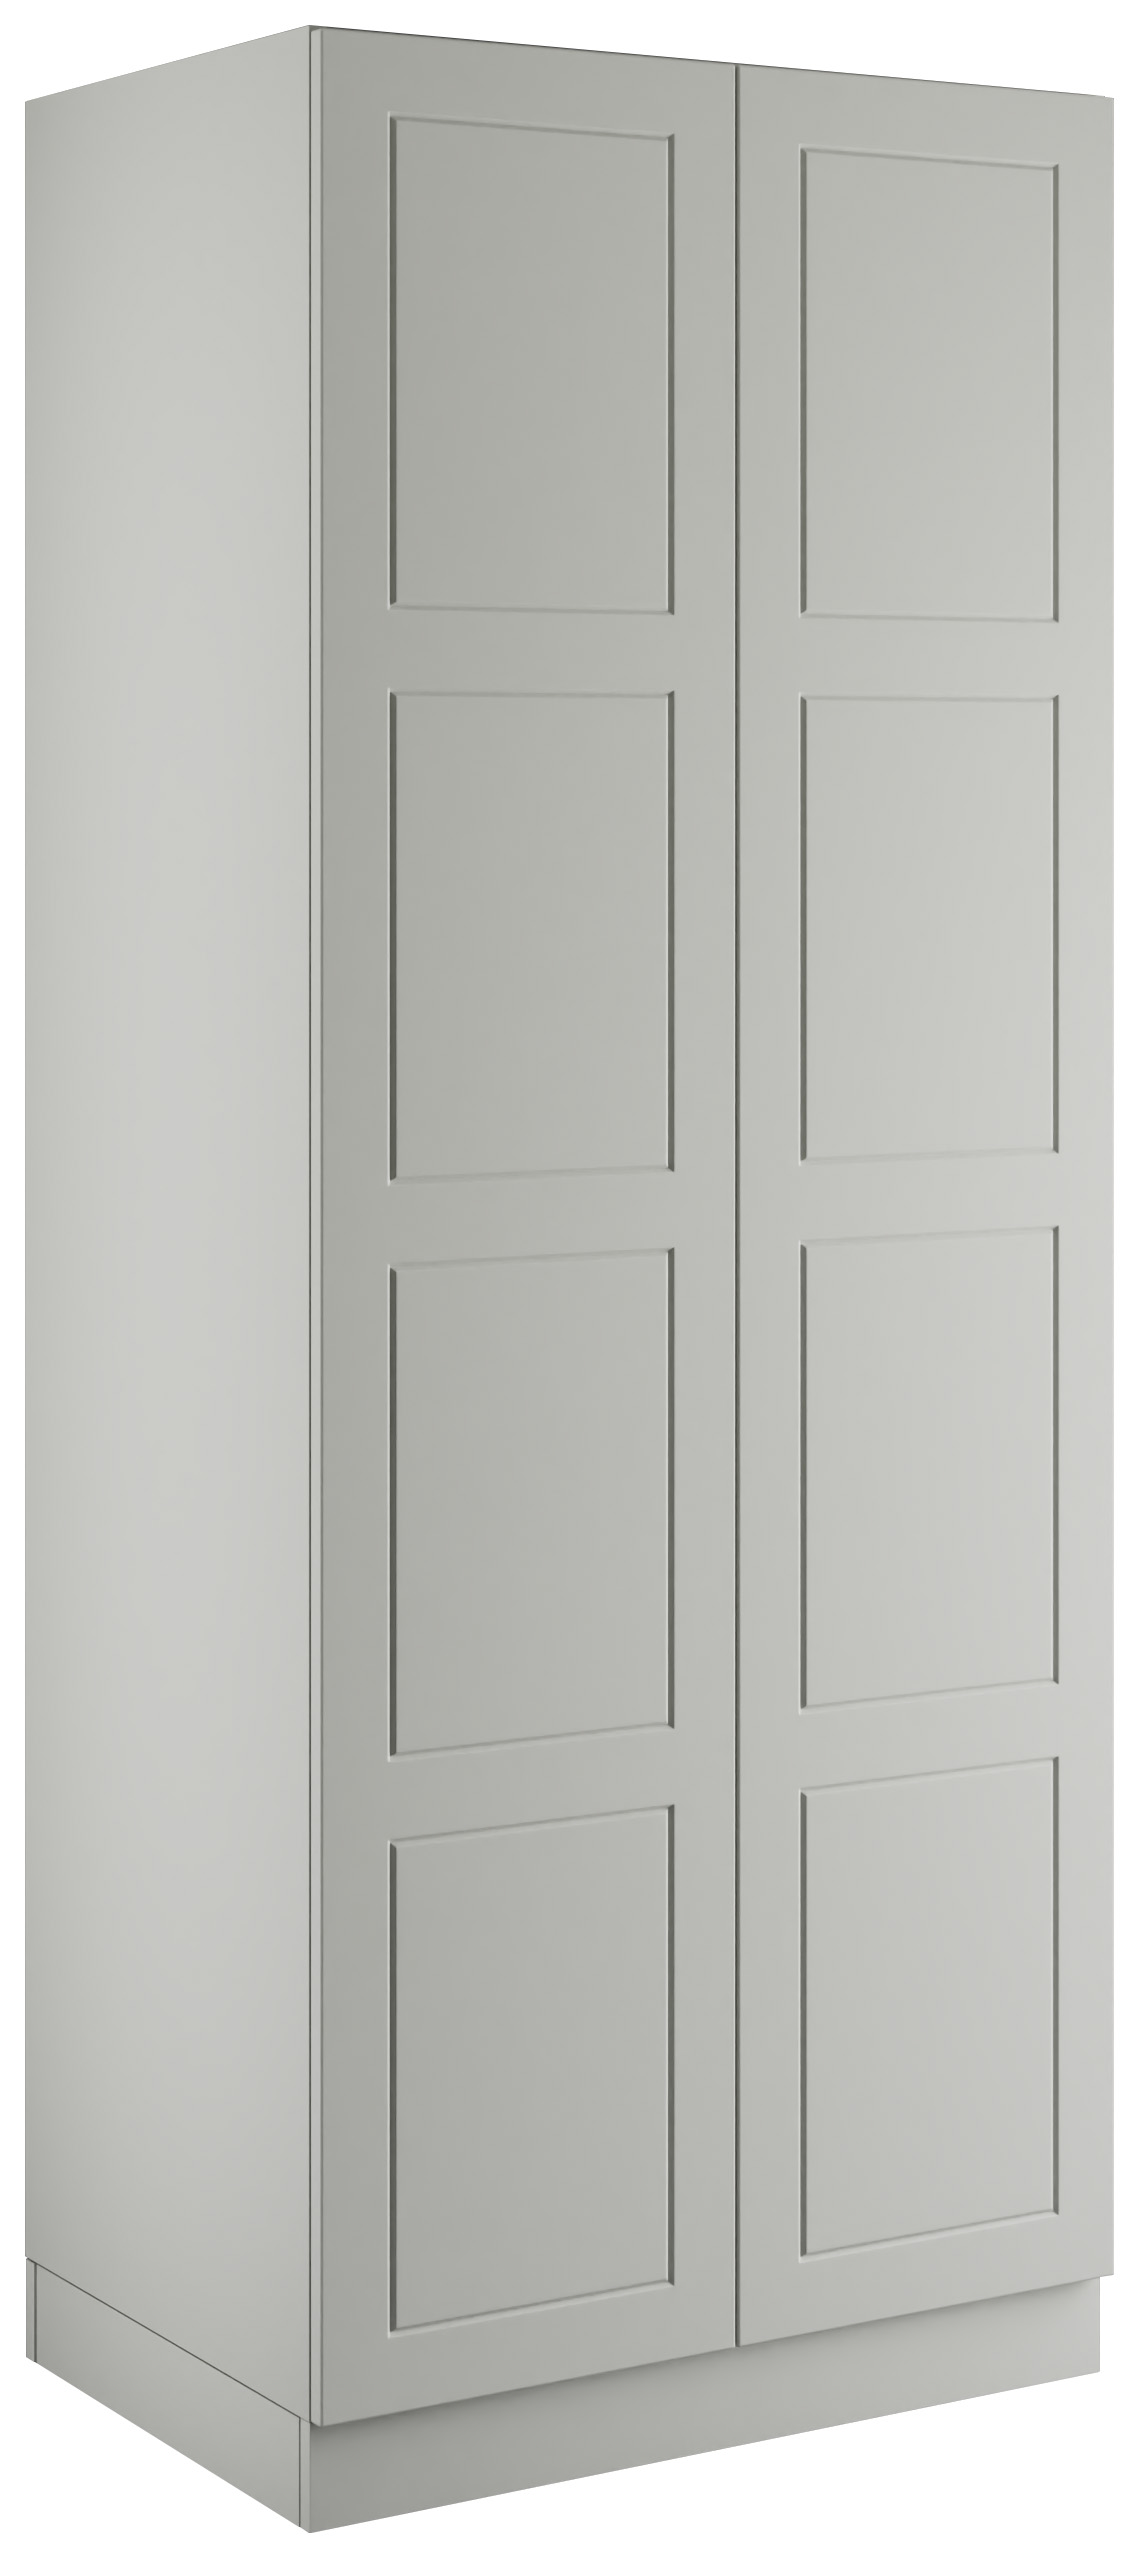 Bramham Light Grey Double Wardrobe with Single Rail & Shelves - 900 x 2260 x 608mm